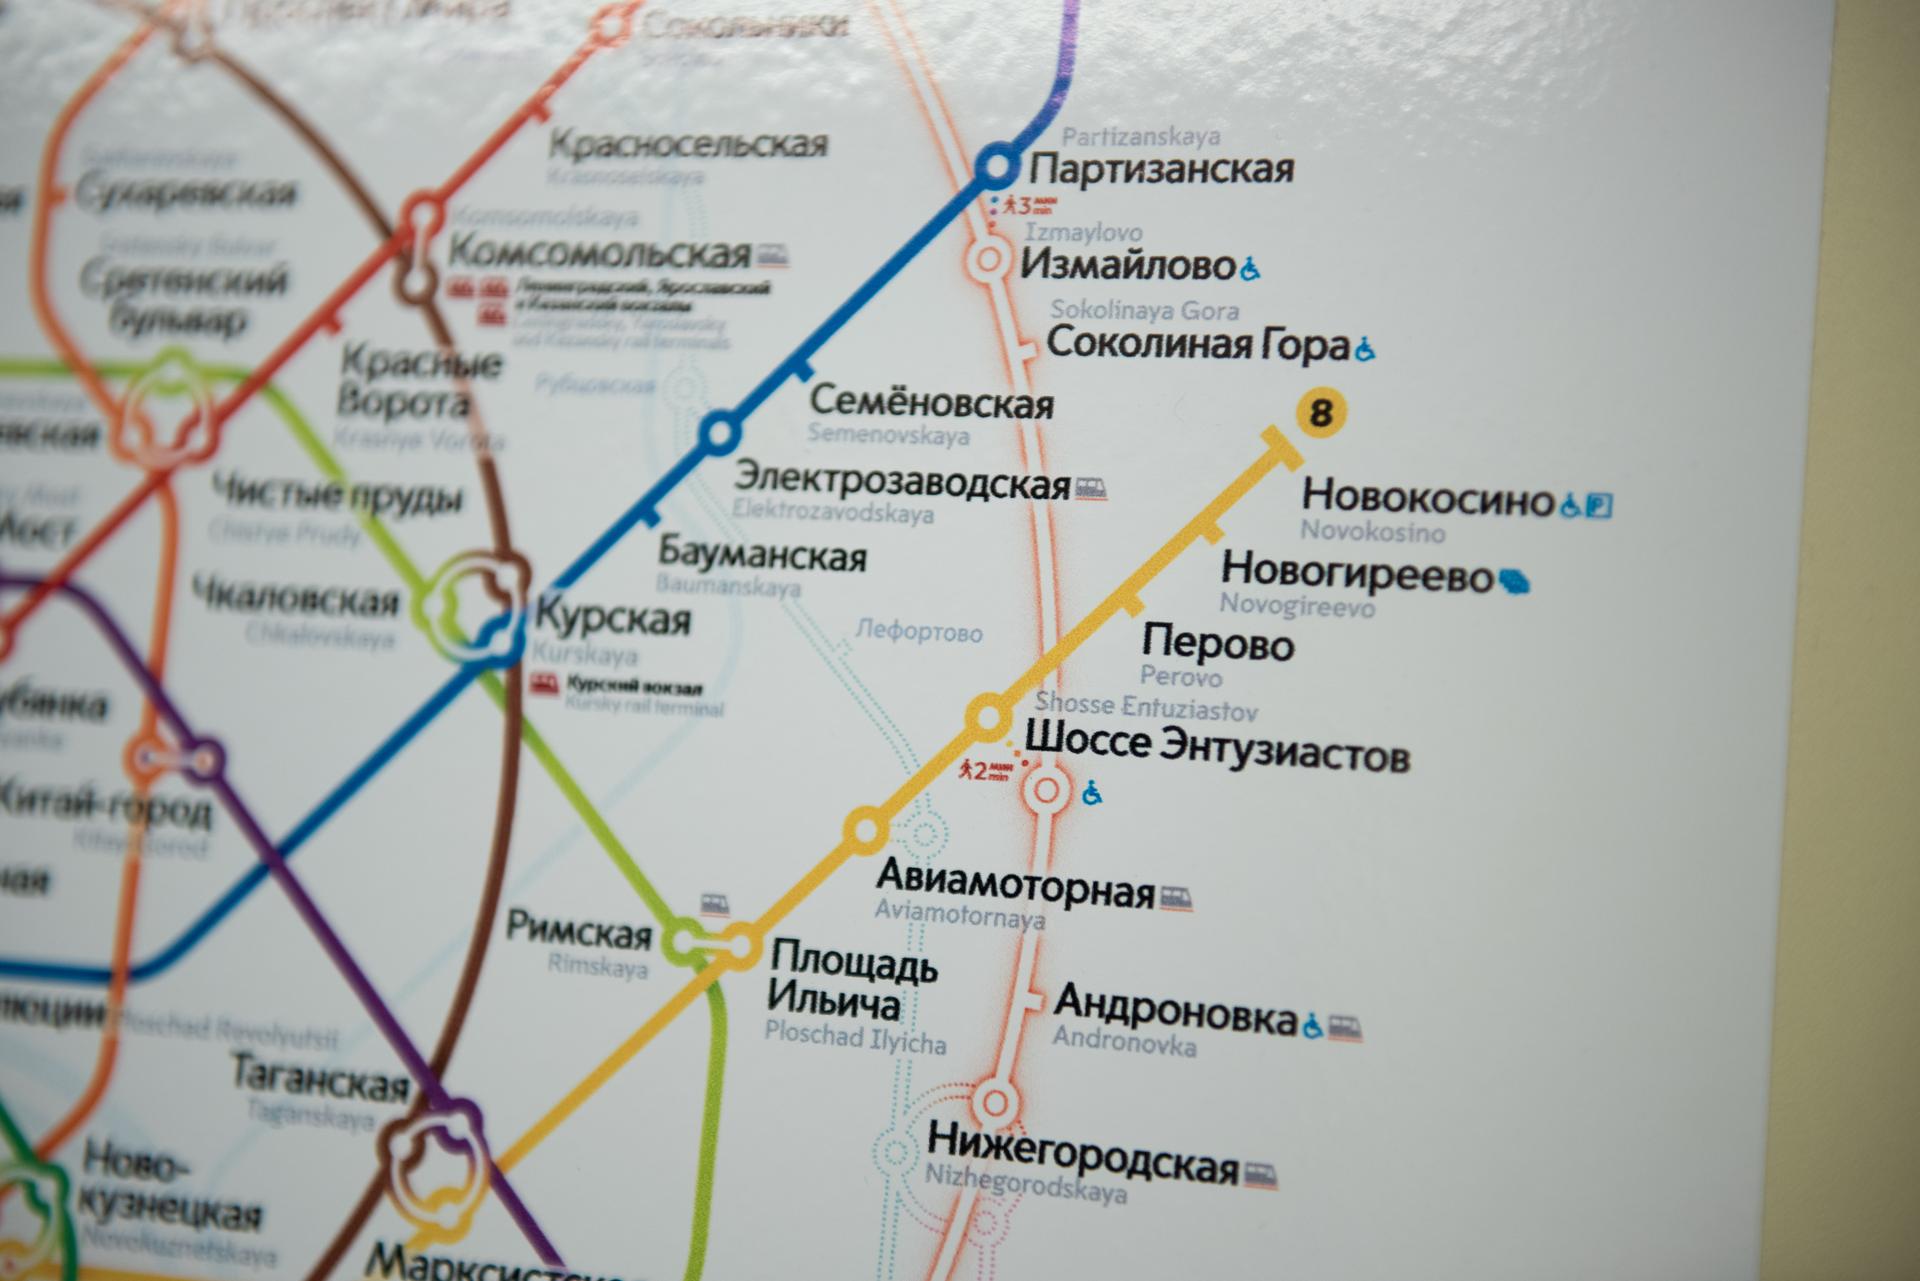 Метро Шоссе Энтузиастов на карте Москвы